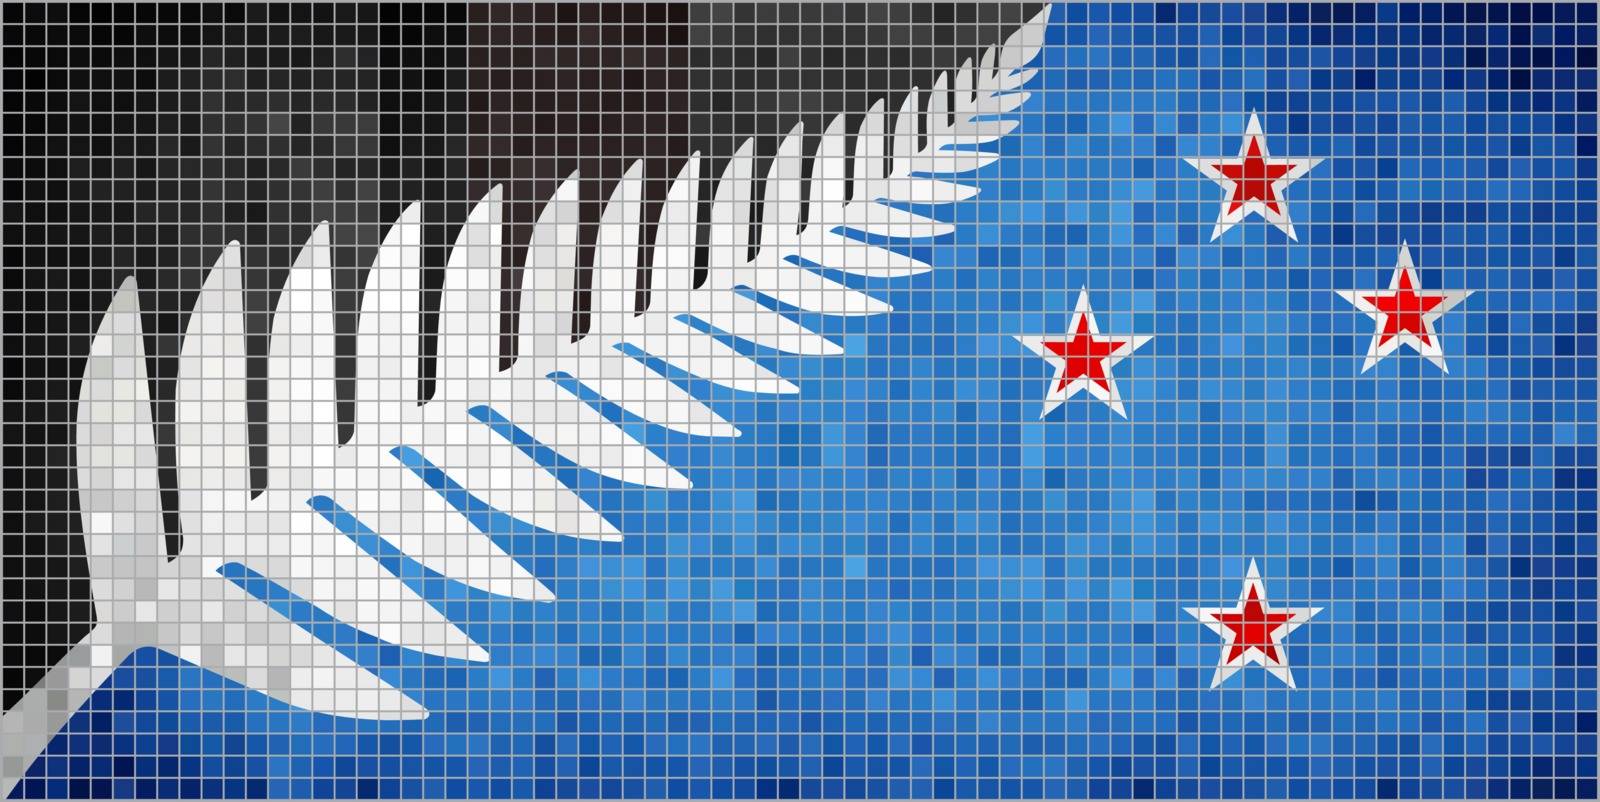 New flag of New Zealand,  
New Zealand flag referendums, 
Abstract Mosaic Flag of New Zealand, 
New Zealand's flag in mosaic, 
Abstract grunge mosaic vector